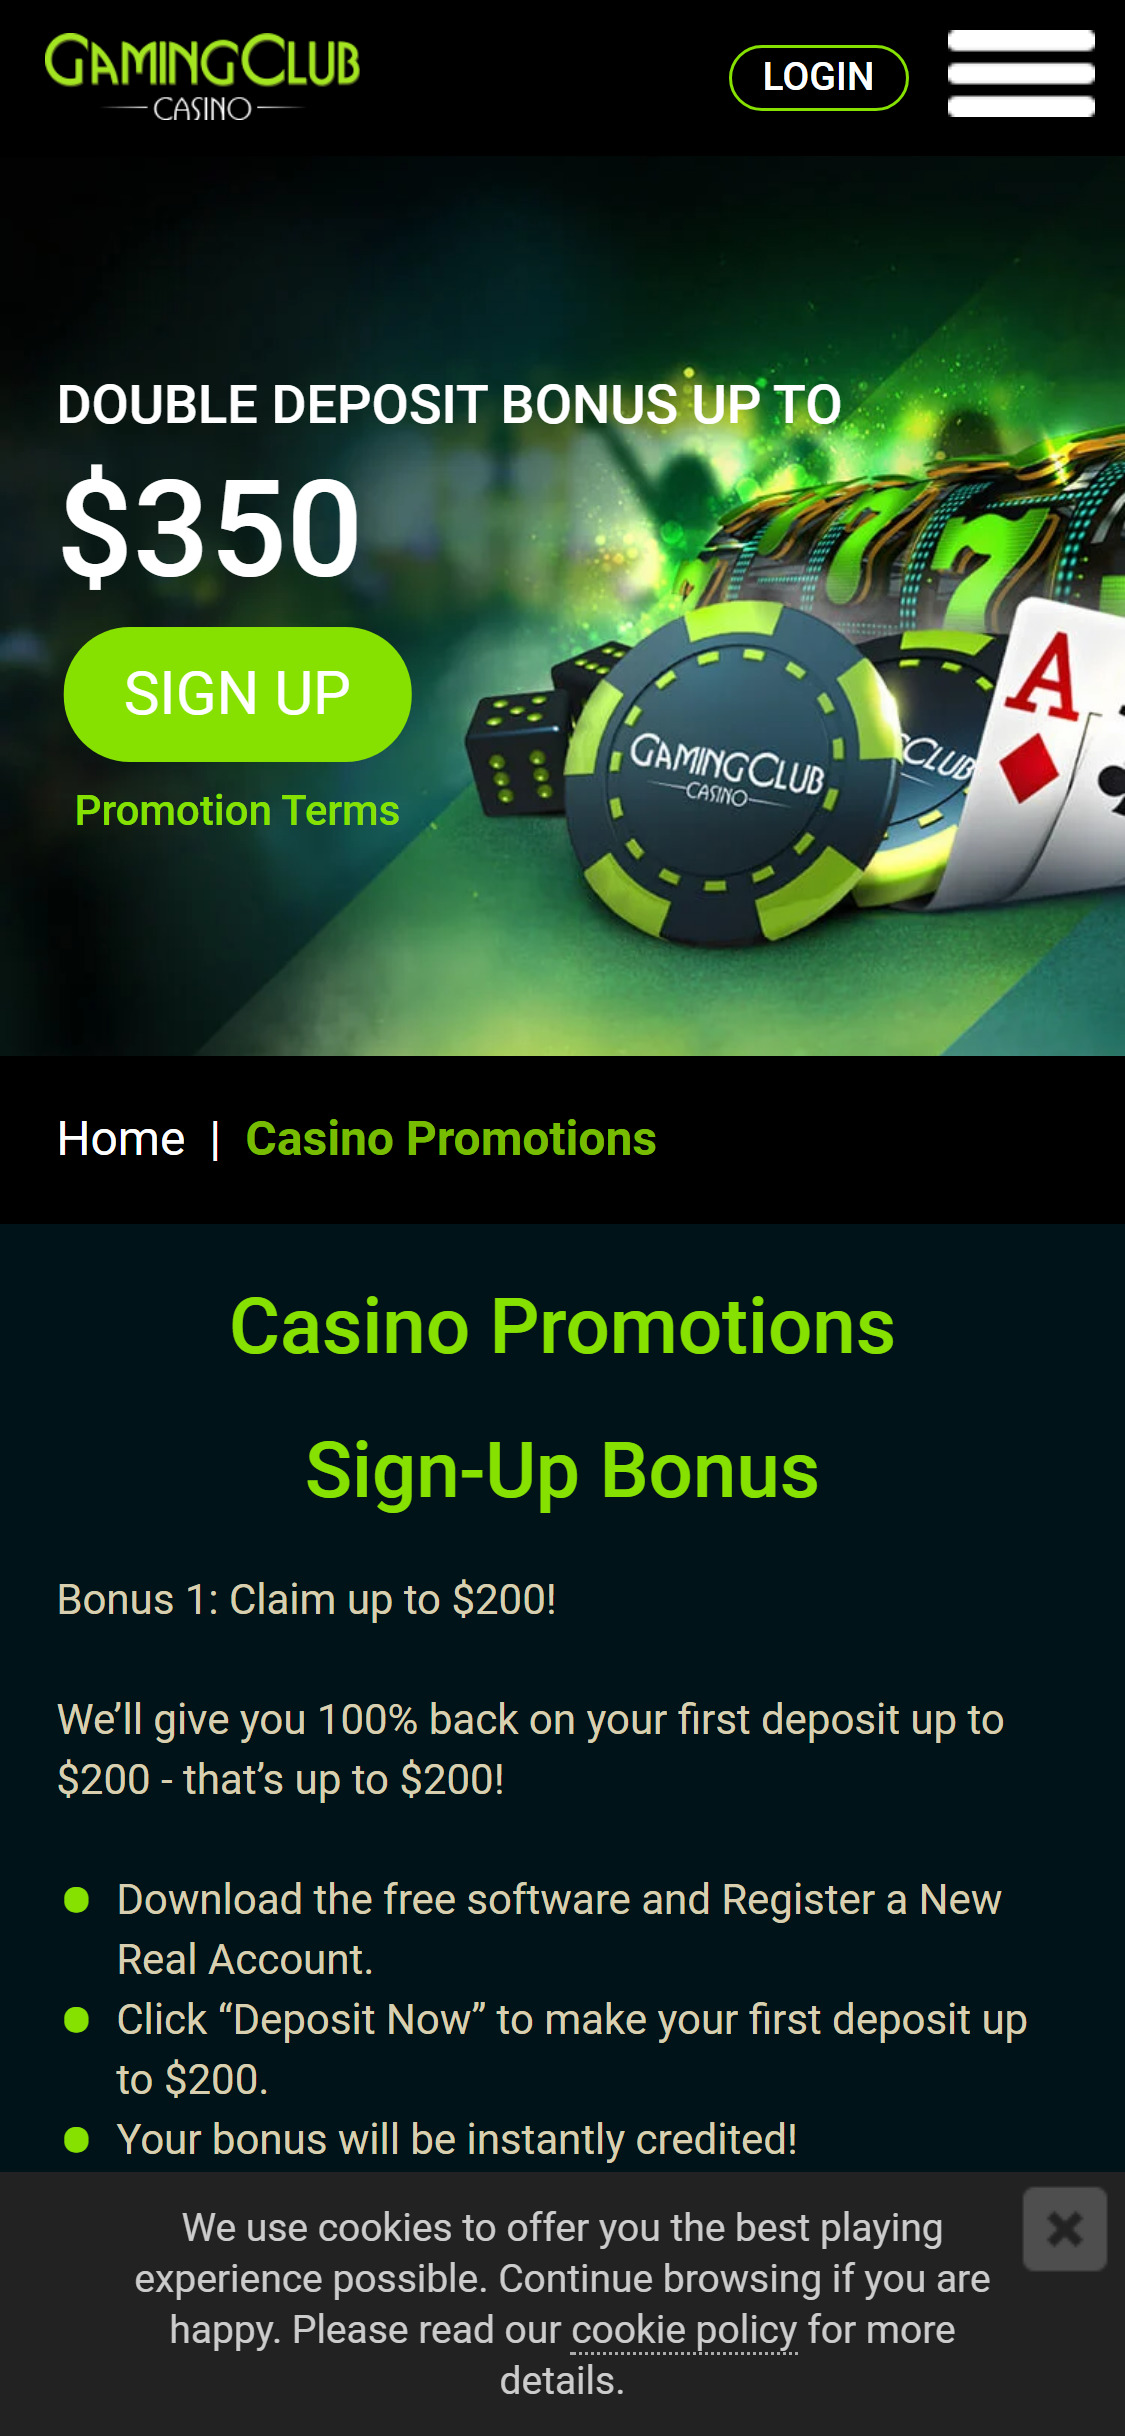 Gaming Club Casino Mobile No Deposit Bonus Review